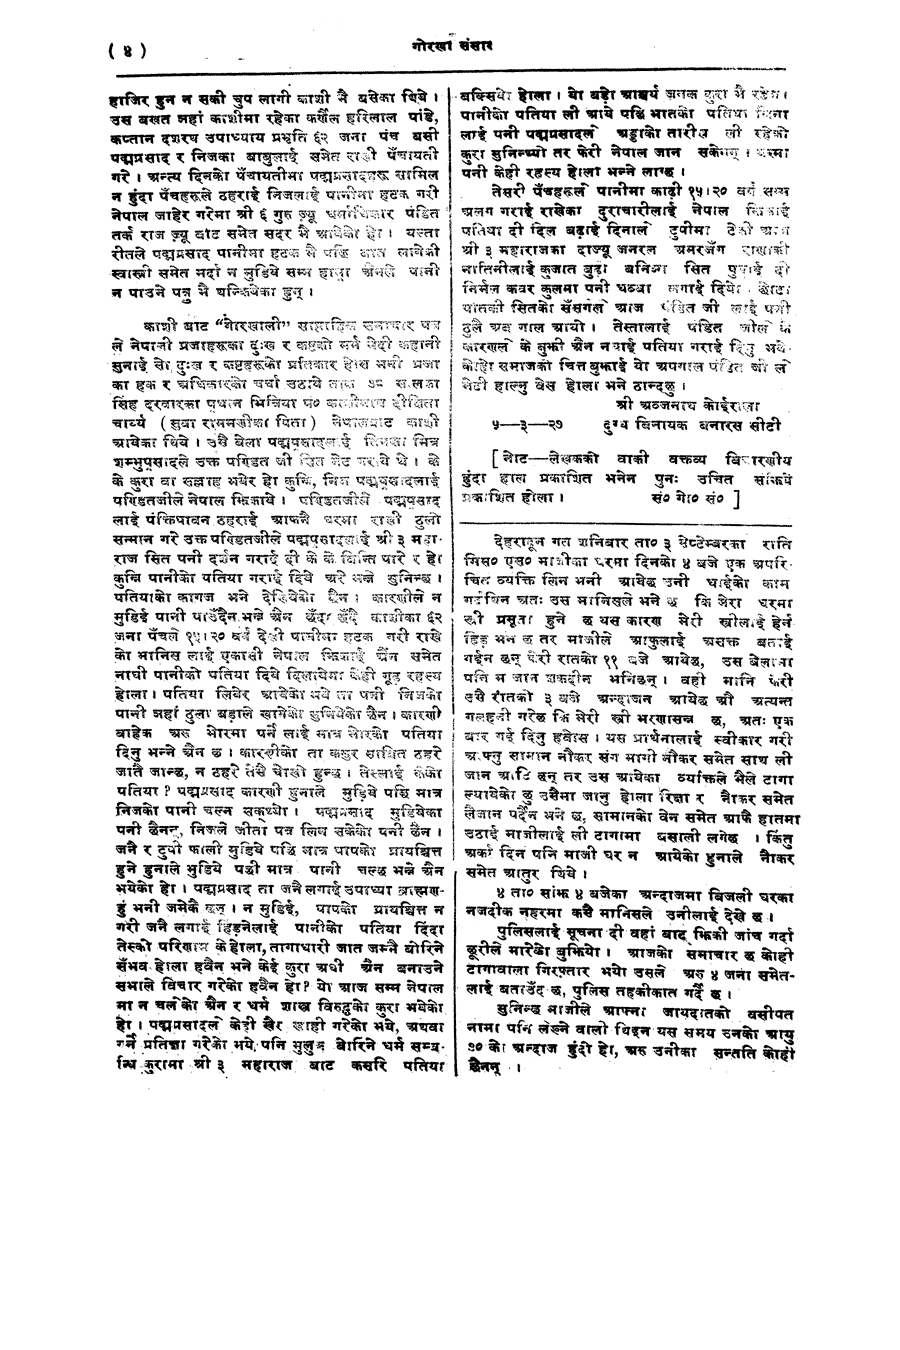 Gorkha Sansar, 6 Sept 1927, page 4